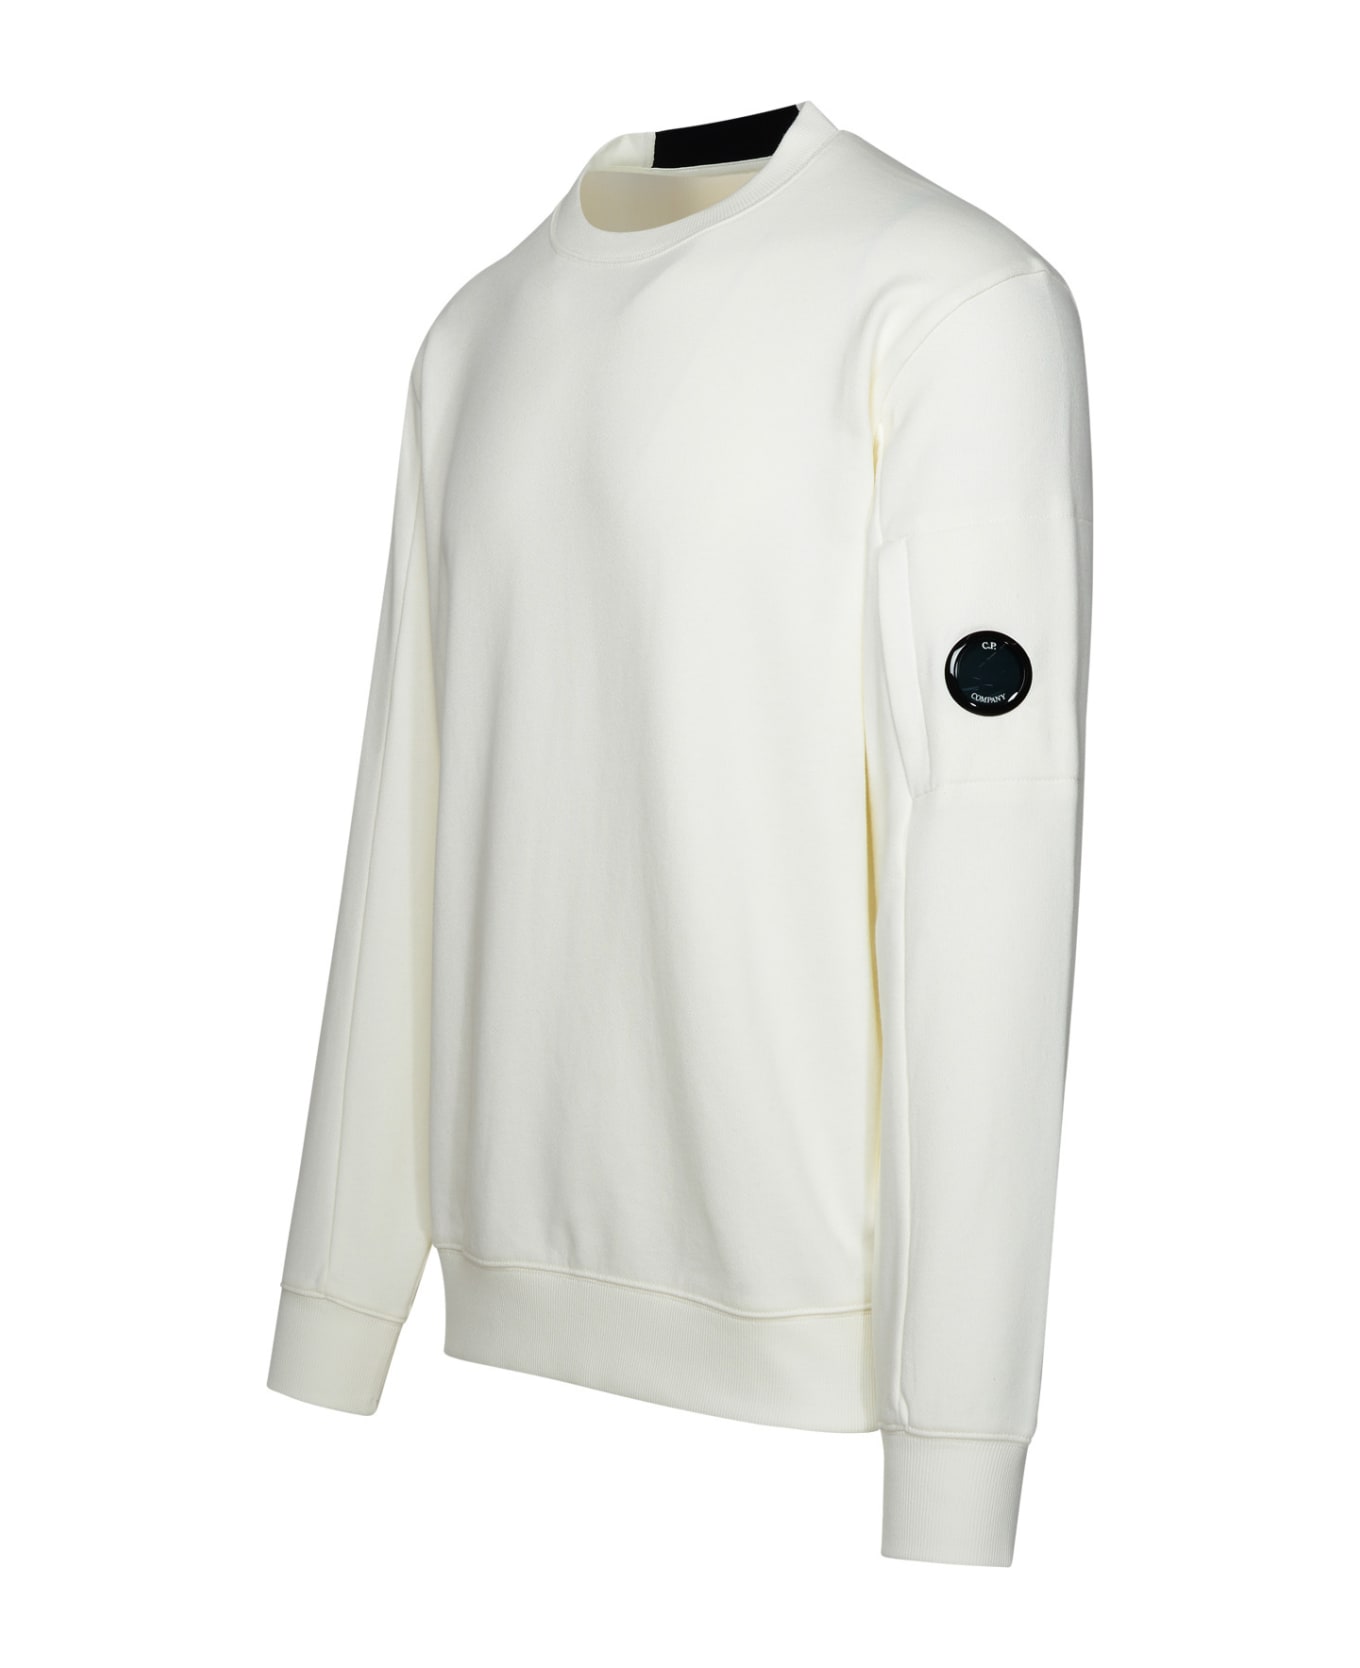 C.P. Company 'diagonal Raised Fleece' Ivory Cotton Sweatshirt - Avorio ニットウェア